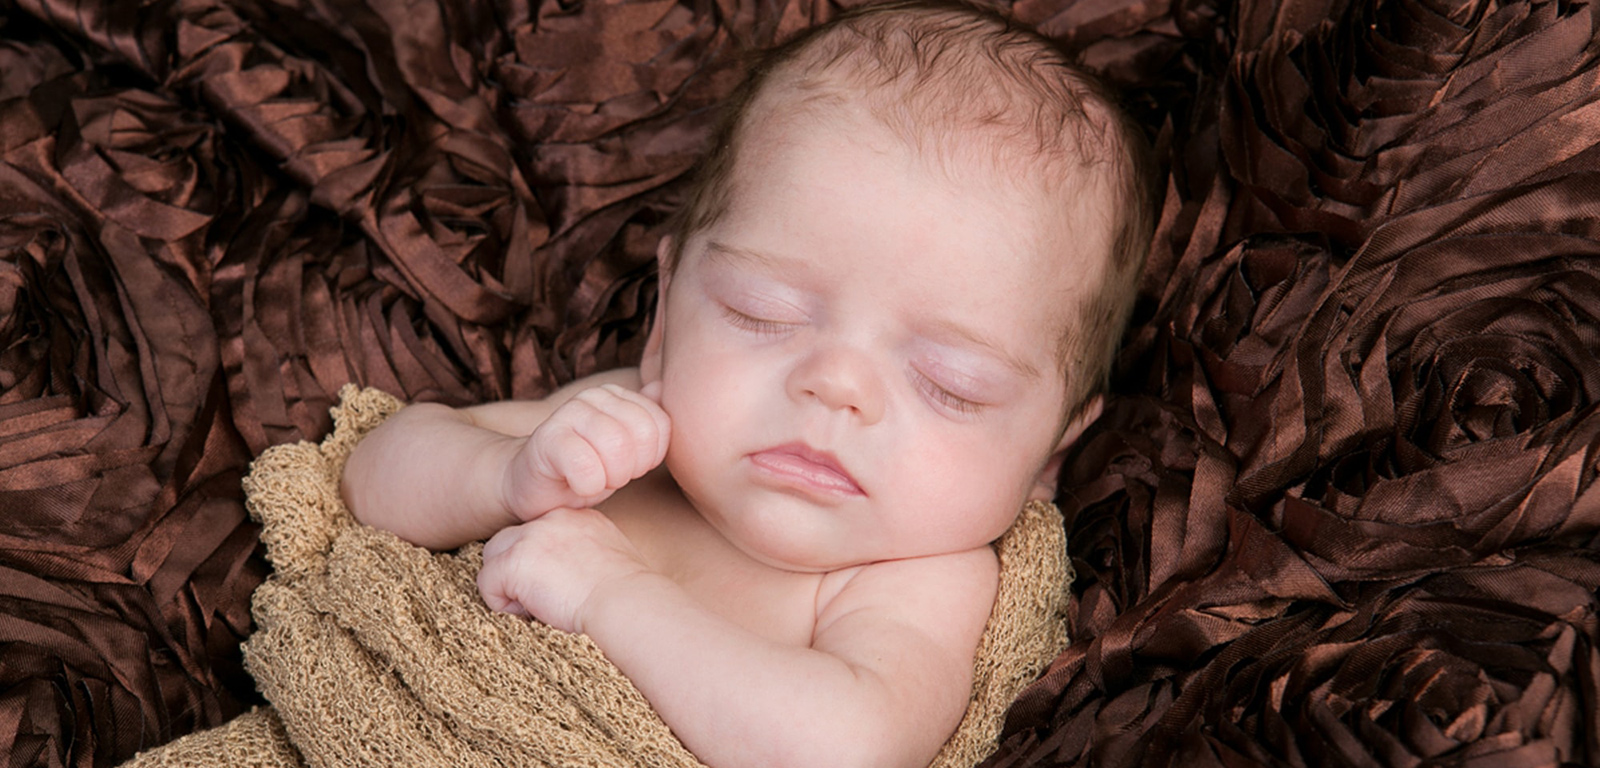 Sweet baby portrait of newborn sleeping